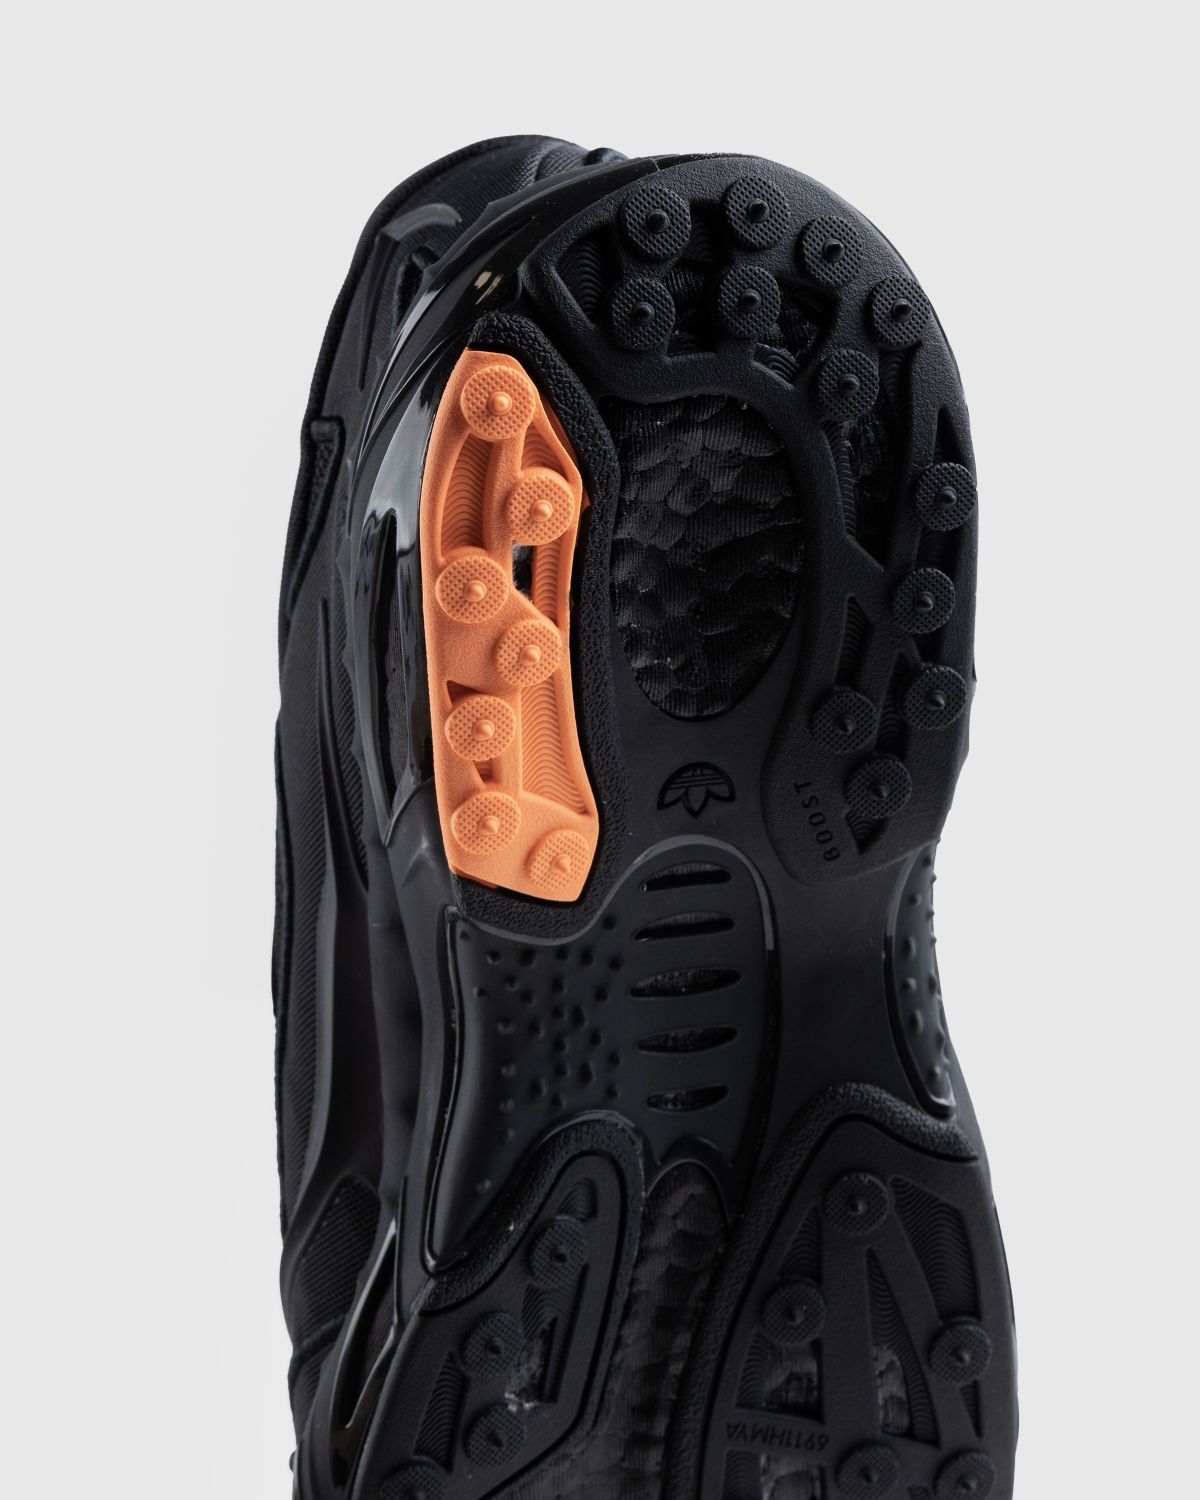 Adidas – Xare Boost Black - Low Top Sneakers - Black - Image 6